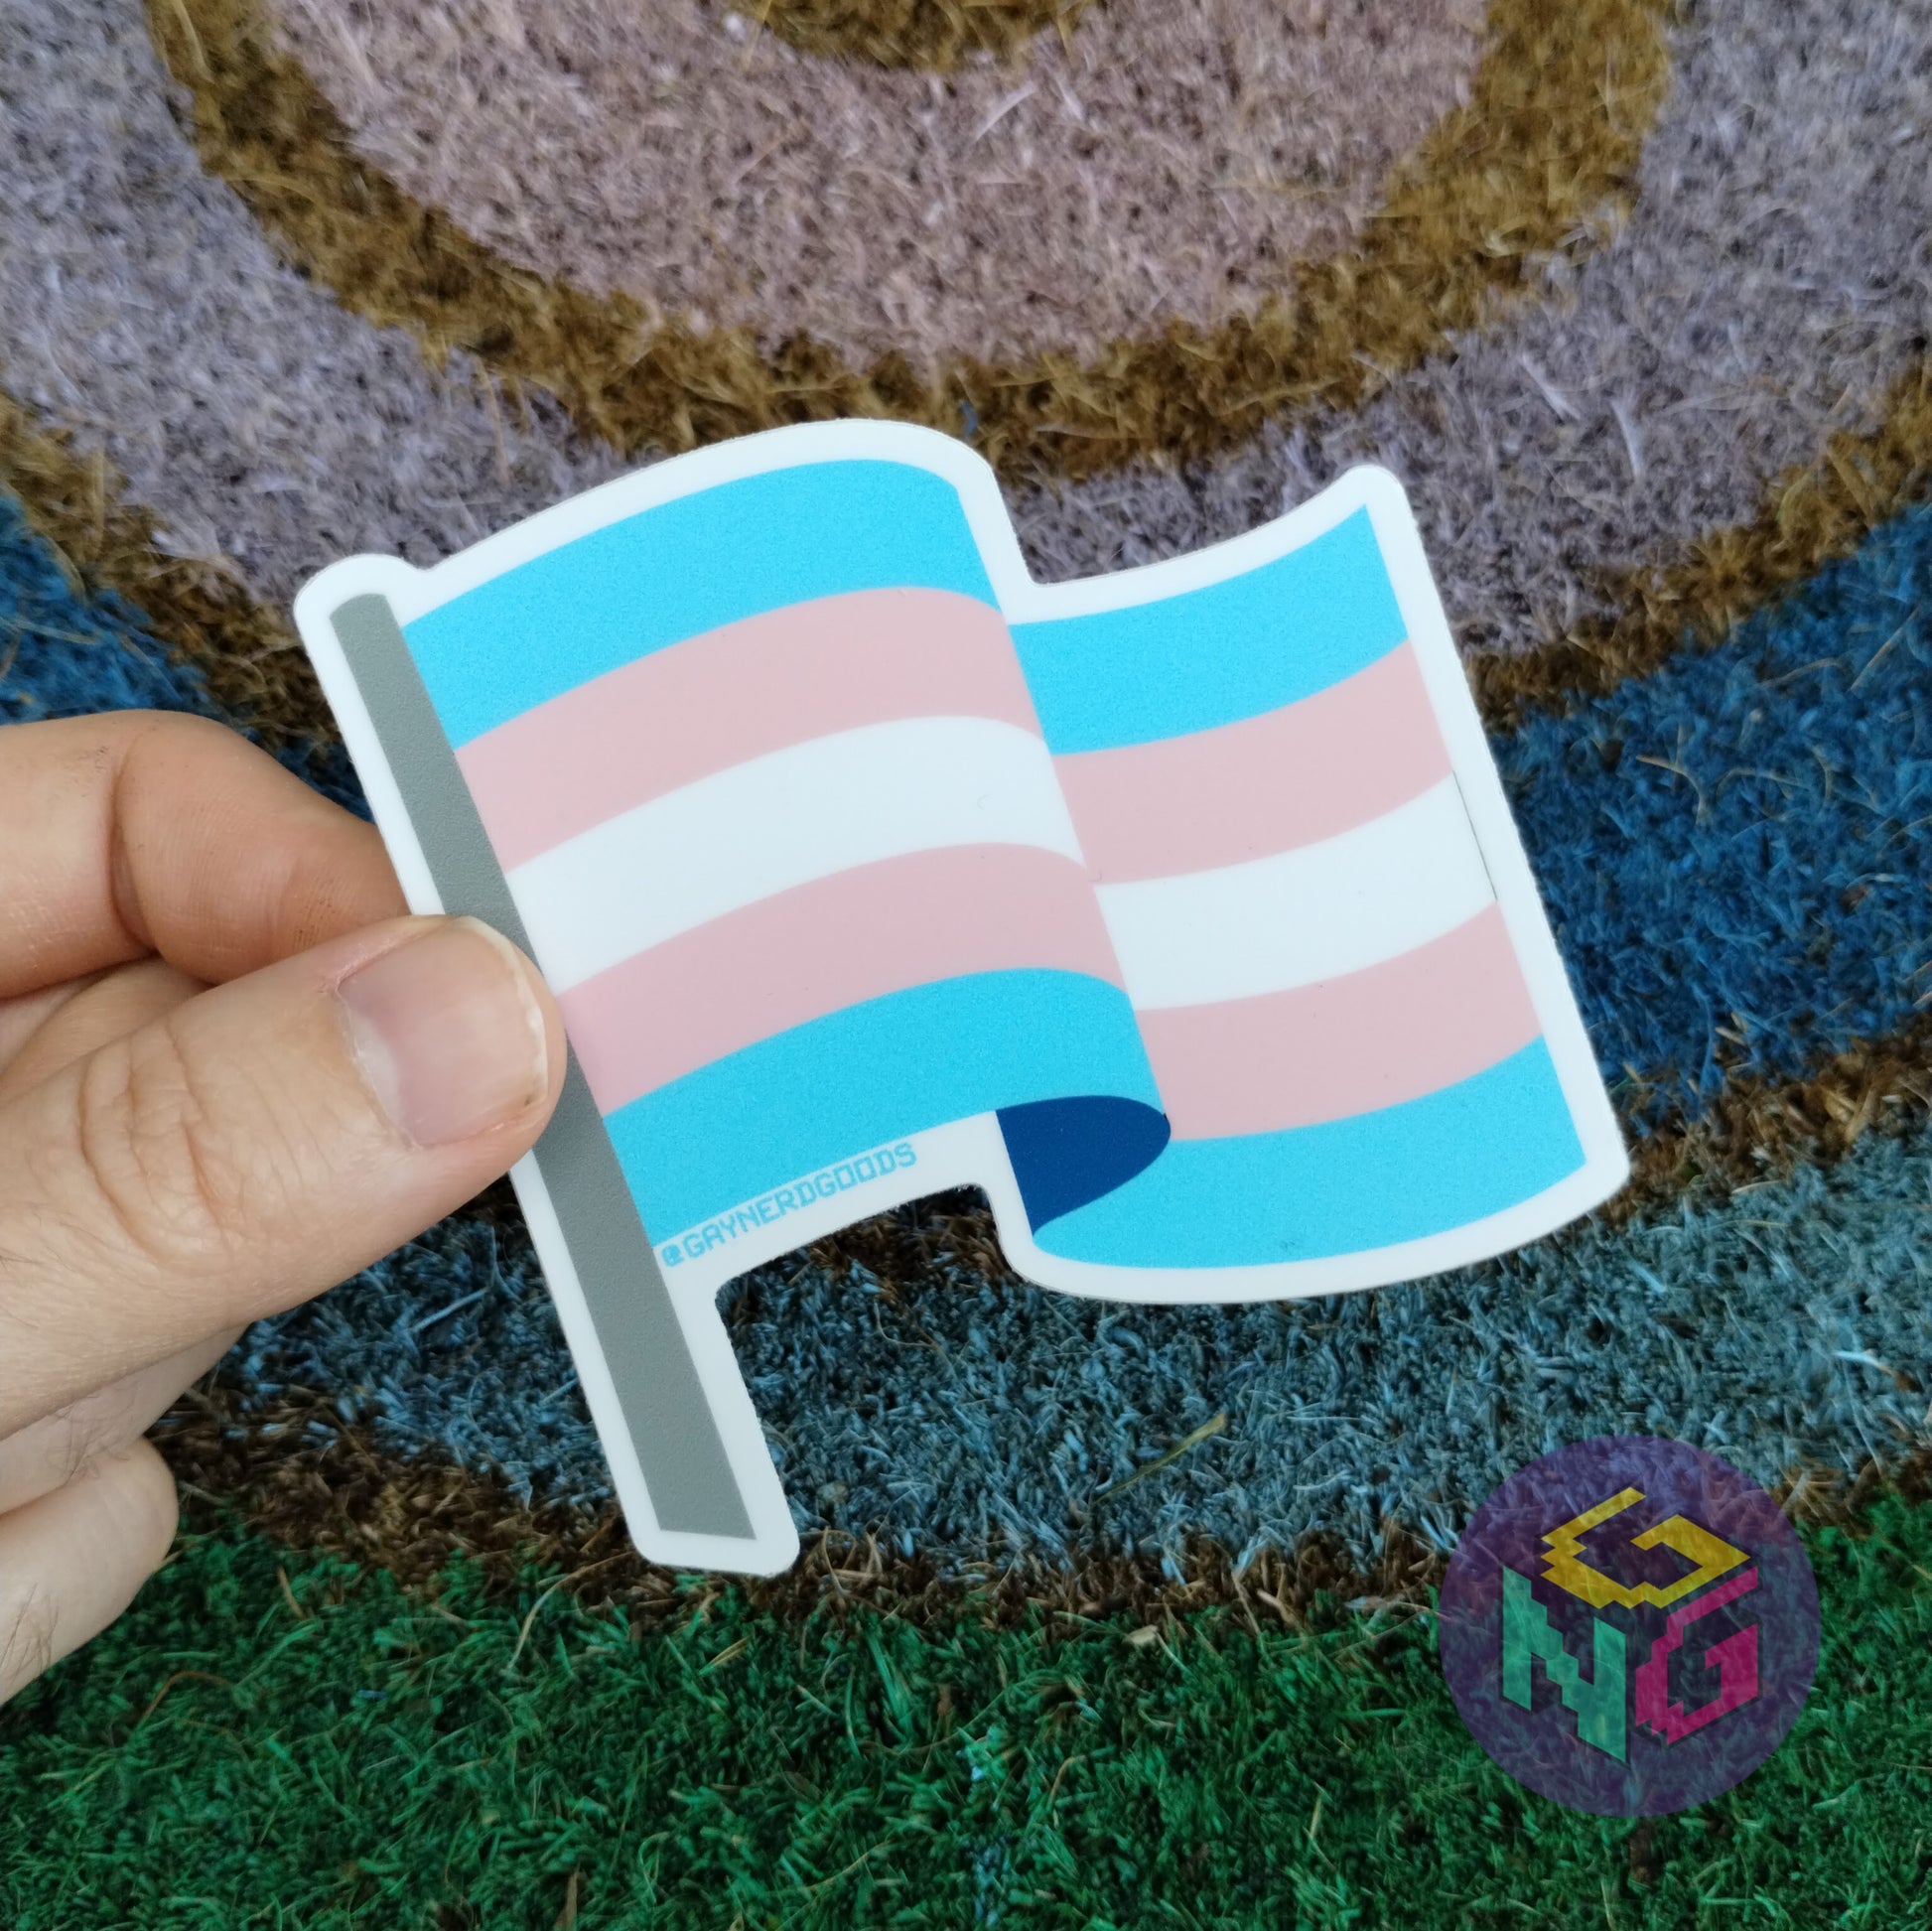 transgender flat sticker held in fingers against rainbow welcome mat